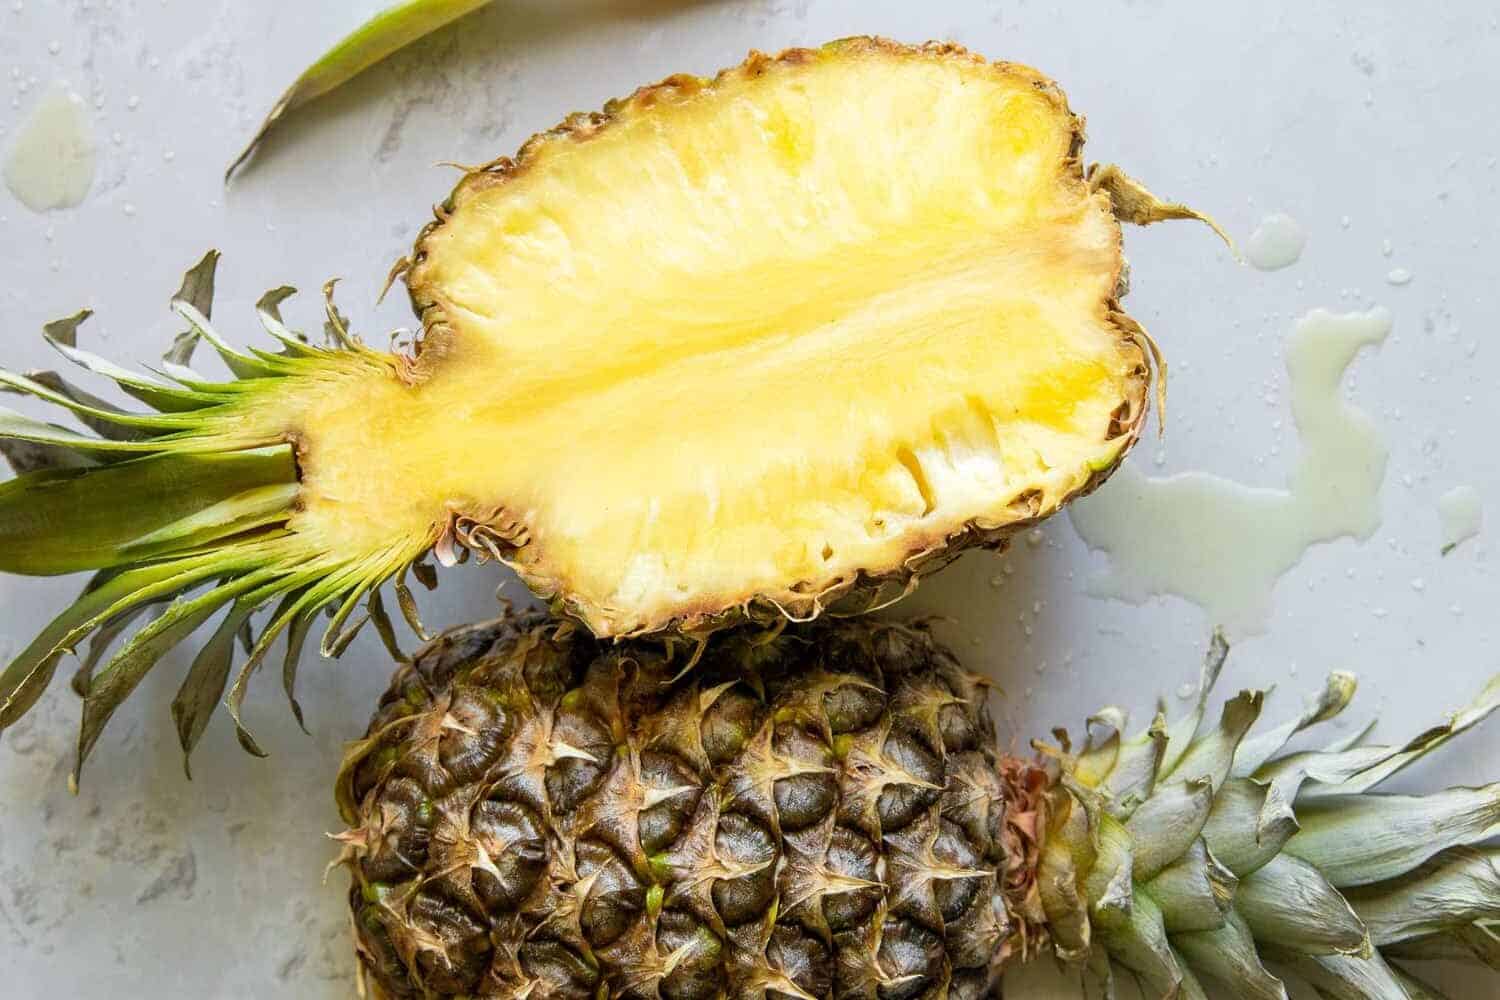 Pineapple for teeth whitening